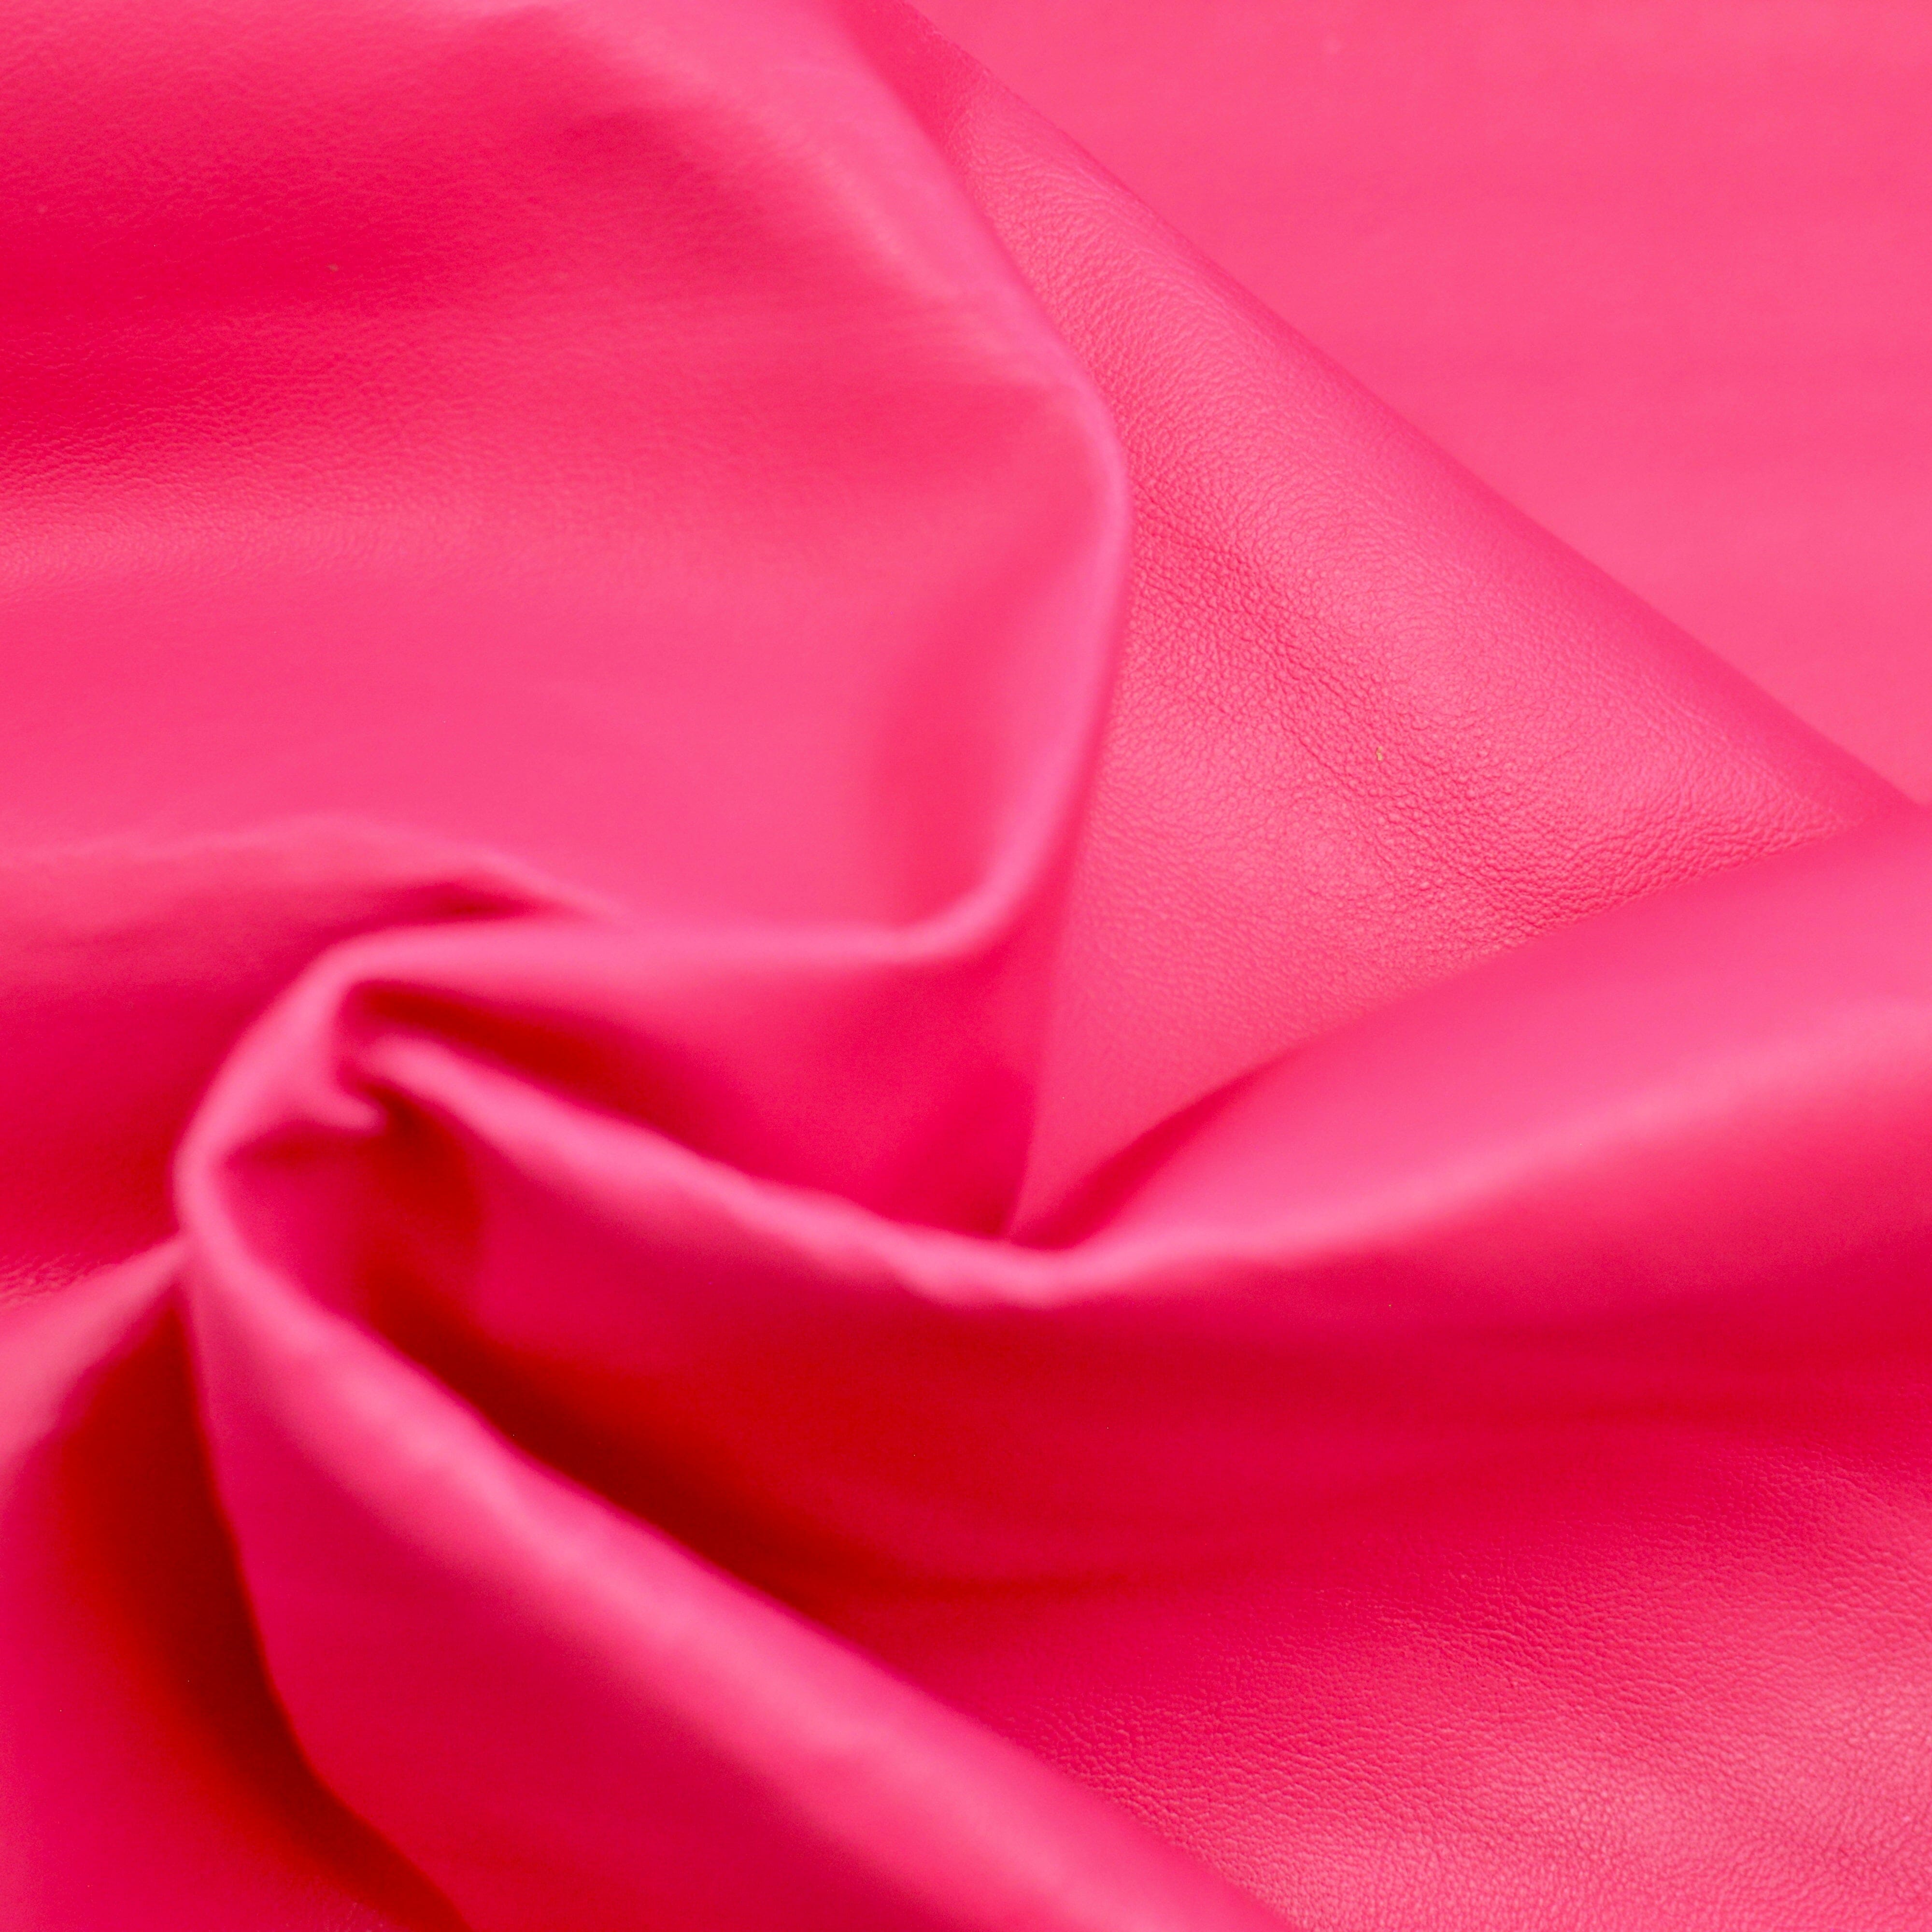 Abschnitt 50x70cm Kunstleder Nappa Style - pink Fabric poshpinks